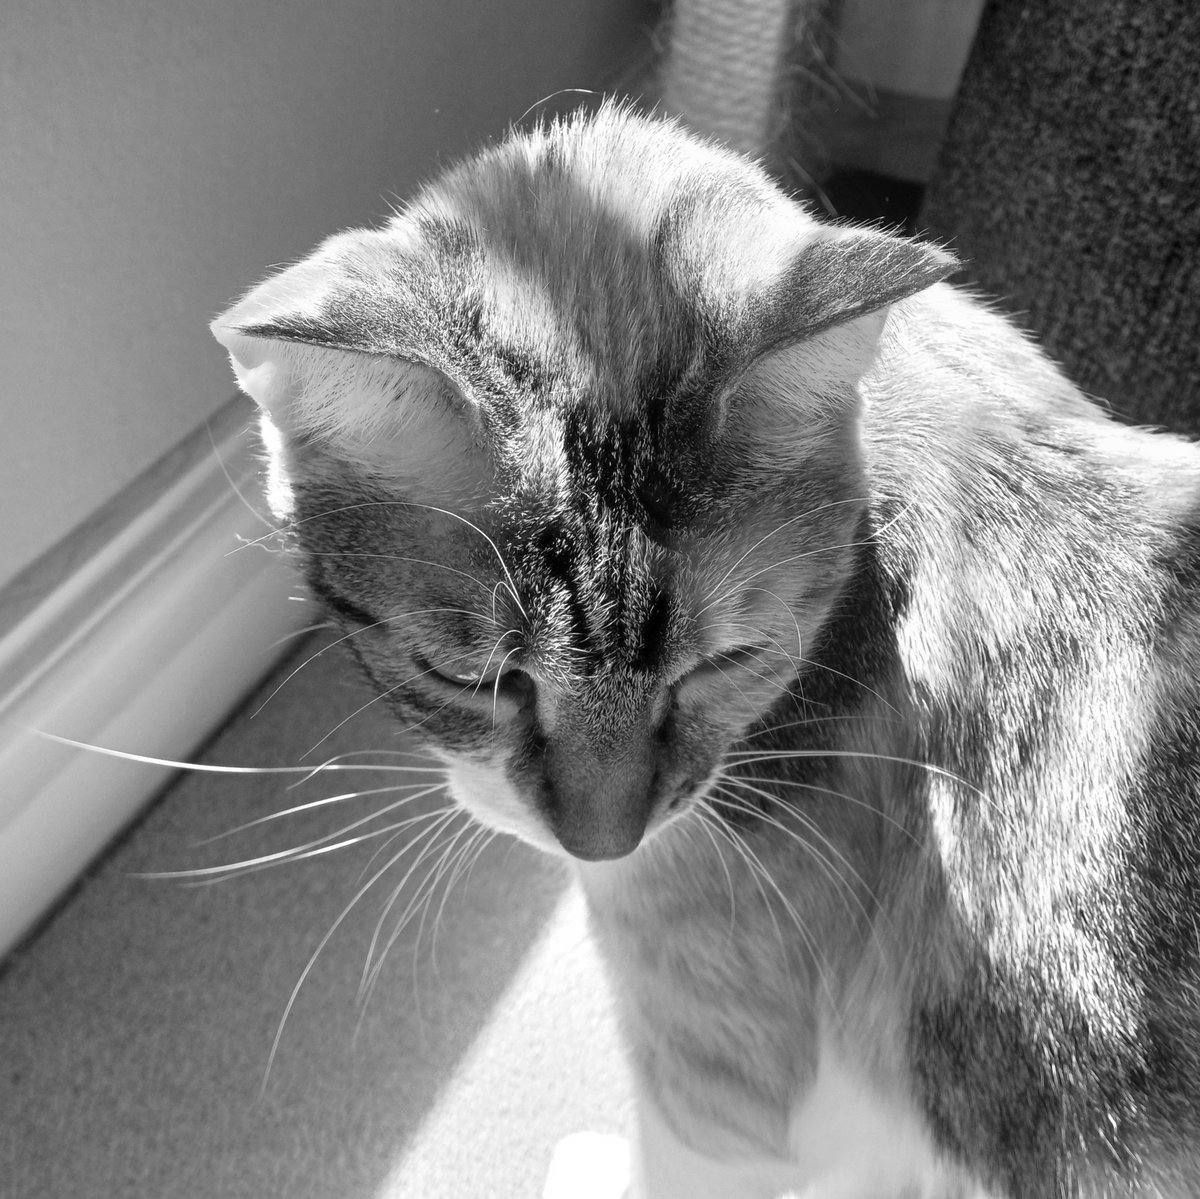 Sunning the whiskers 😼

#catlife #catsinblackandwhite #whiskerwednesday #catsofinstagram #catsinsunshine 

instagram.com/p/C4uW2Nmot65/